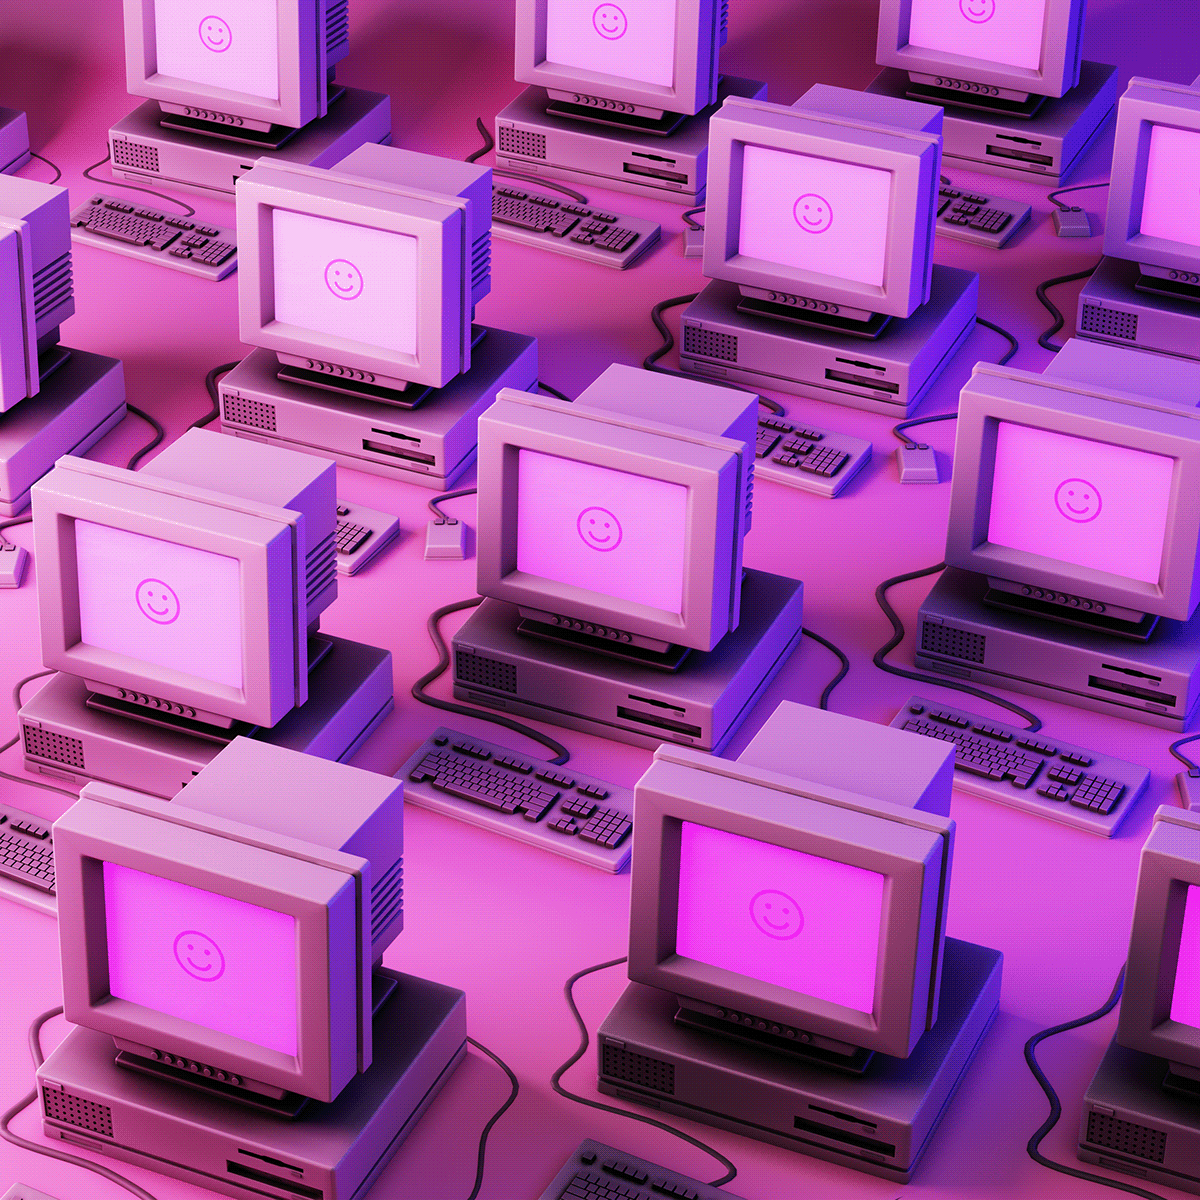 3D 3D model aesthetic Computer computermodel pastel Retro RetroComputer vintage